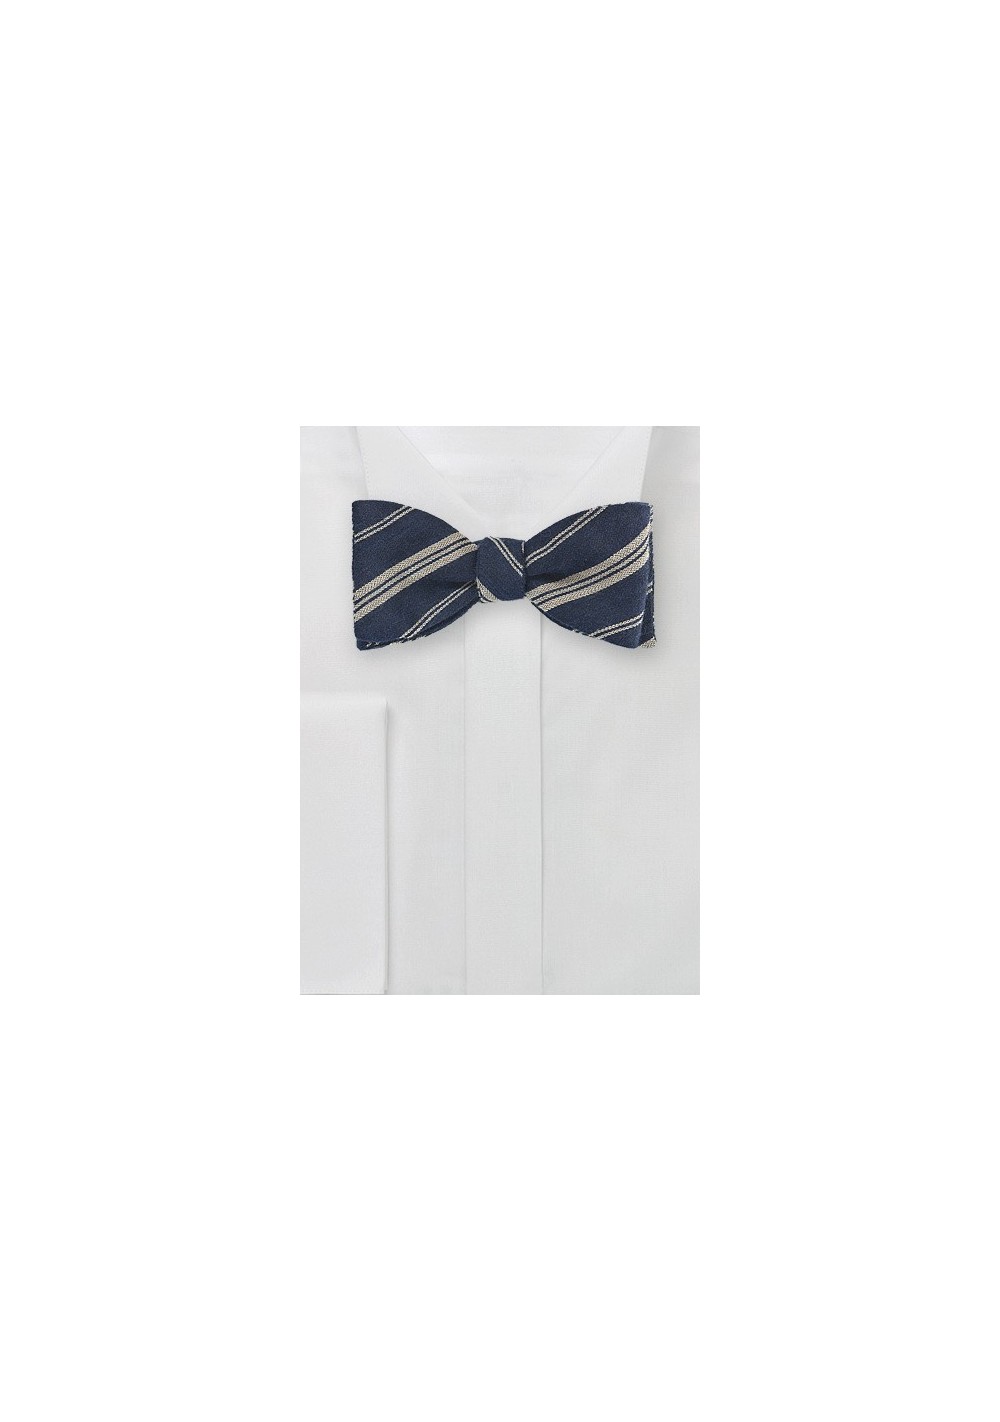 Wool Striped Bow Tie in Dark Navy and Beige